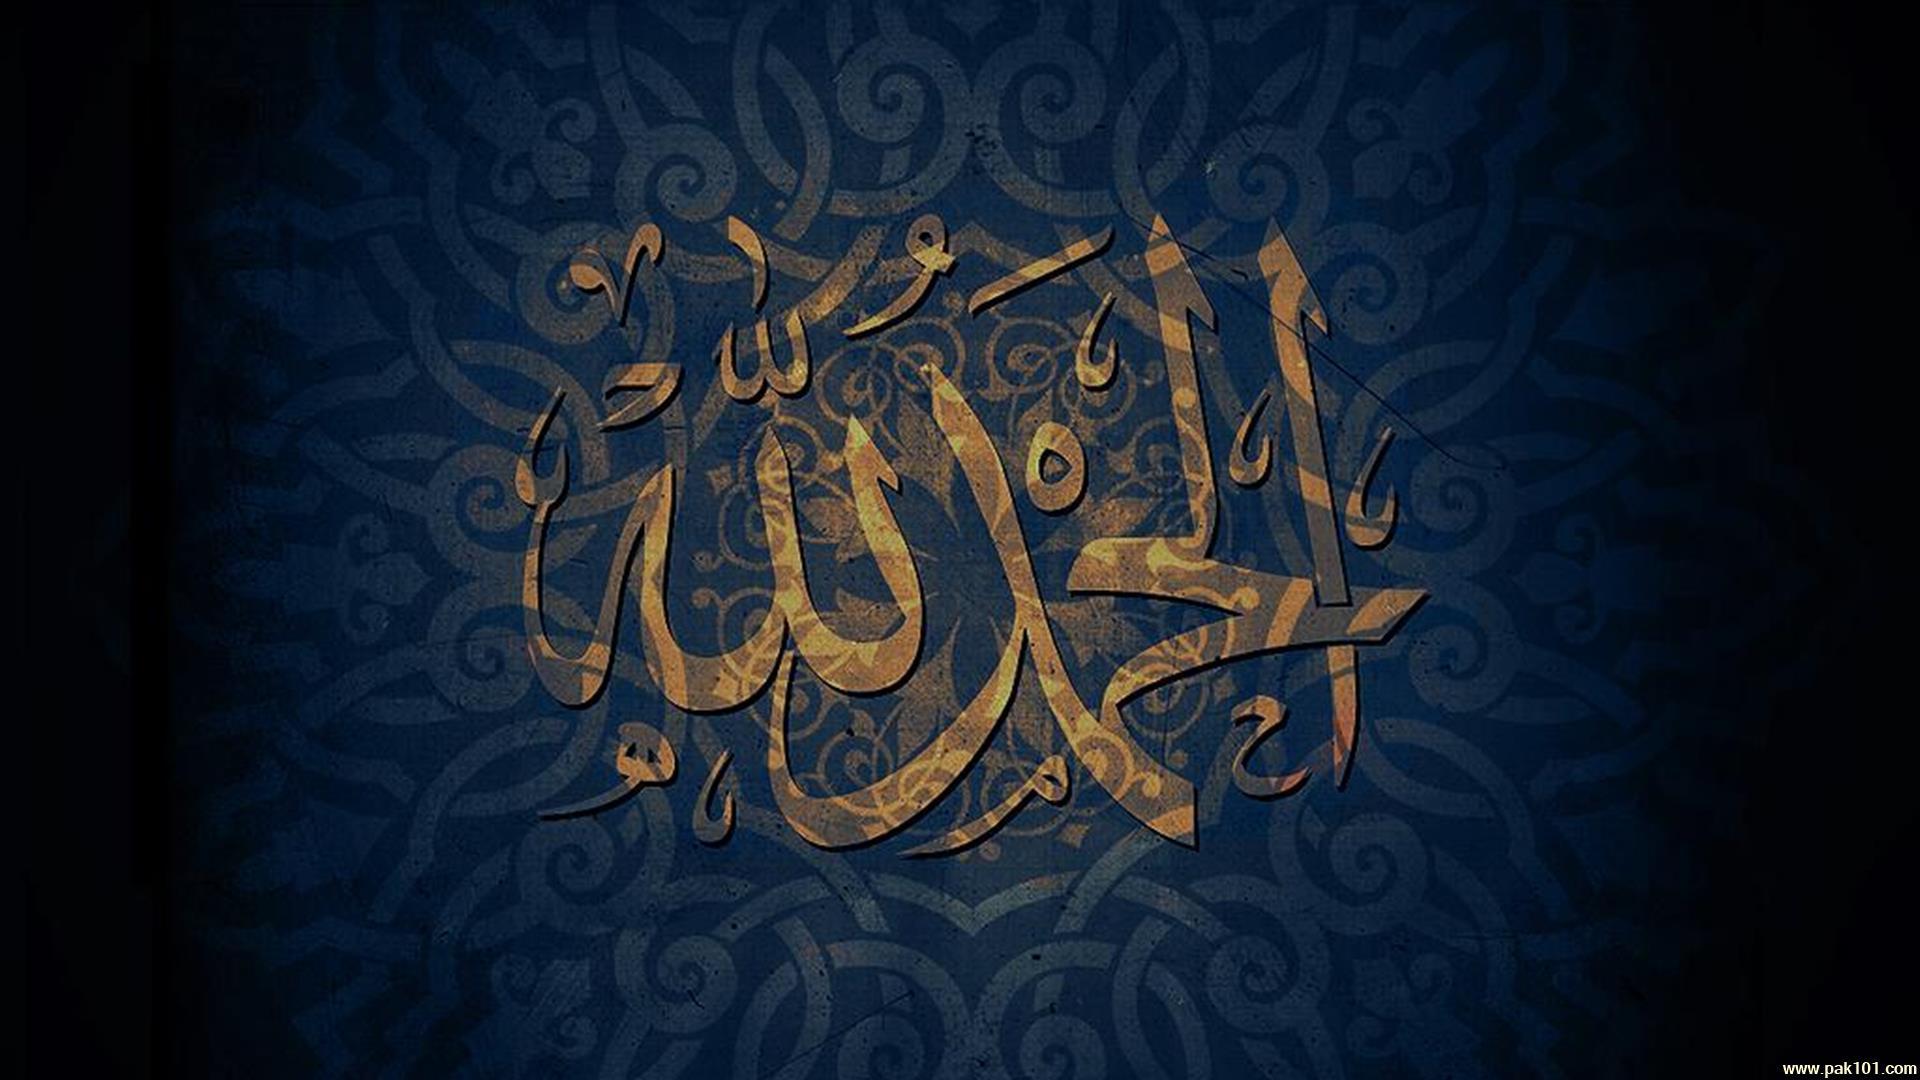 Wallpaper > Islamic > Allah high quality! Free download 1024x768